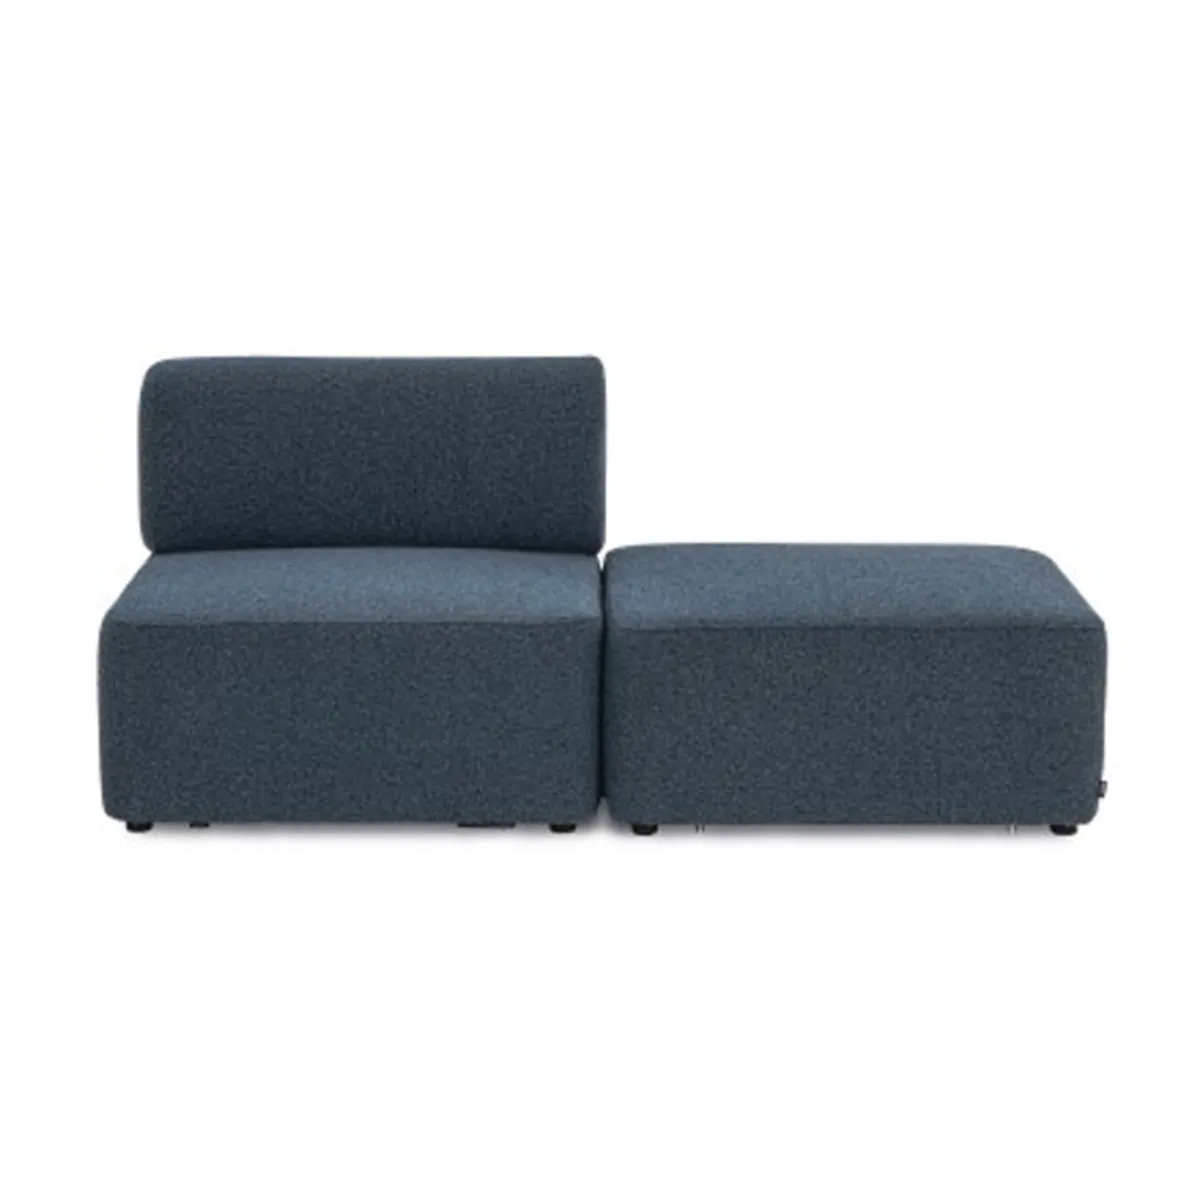 Corey modular sofa 4